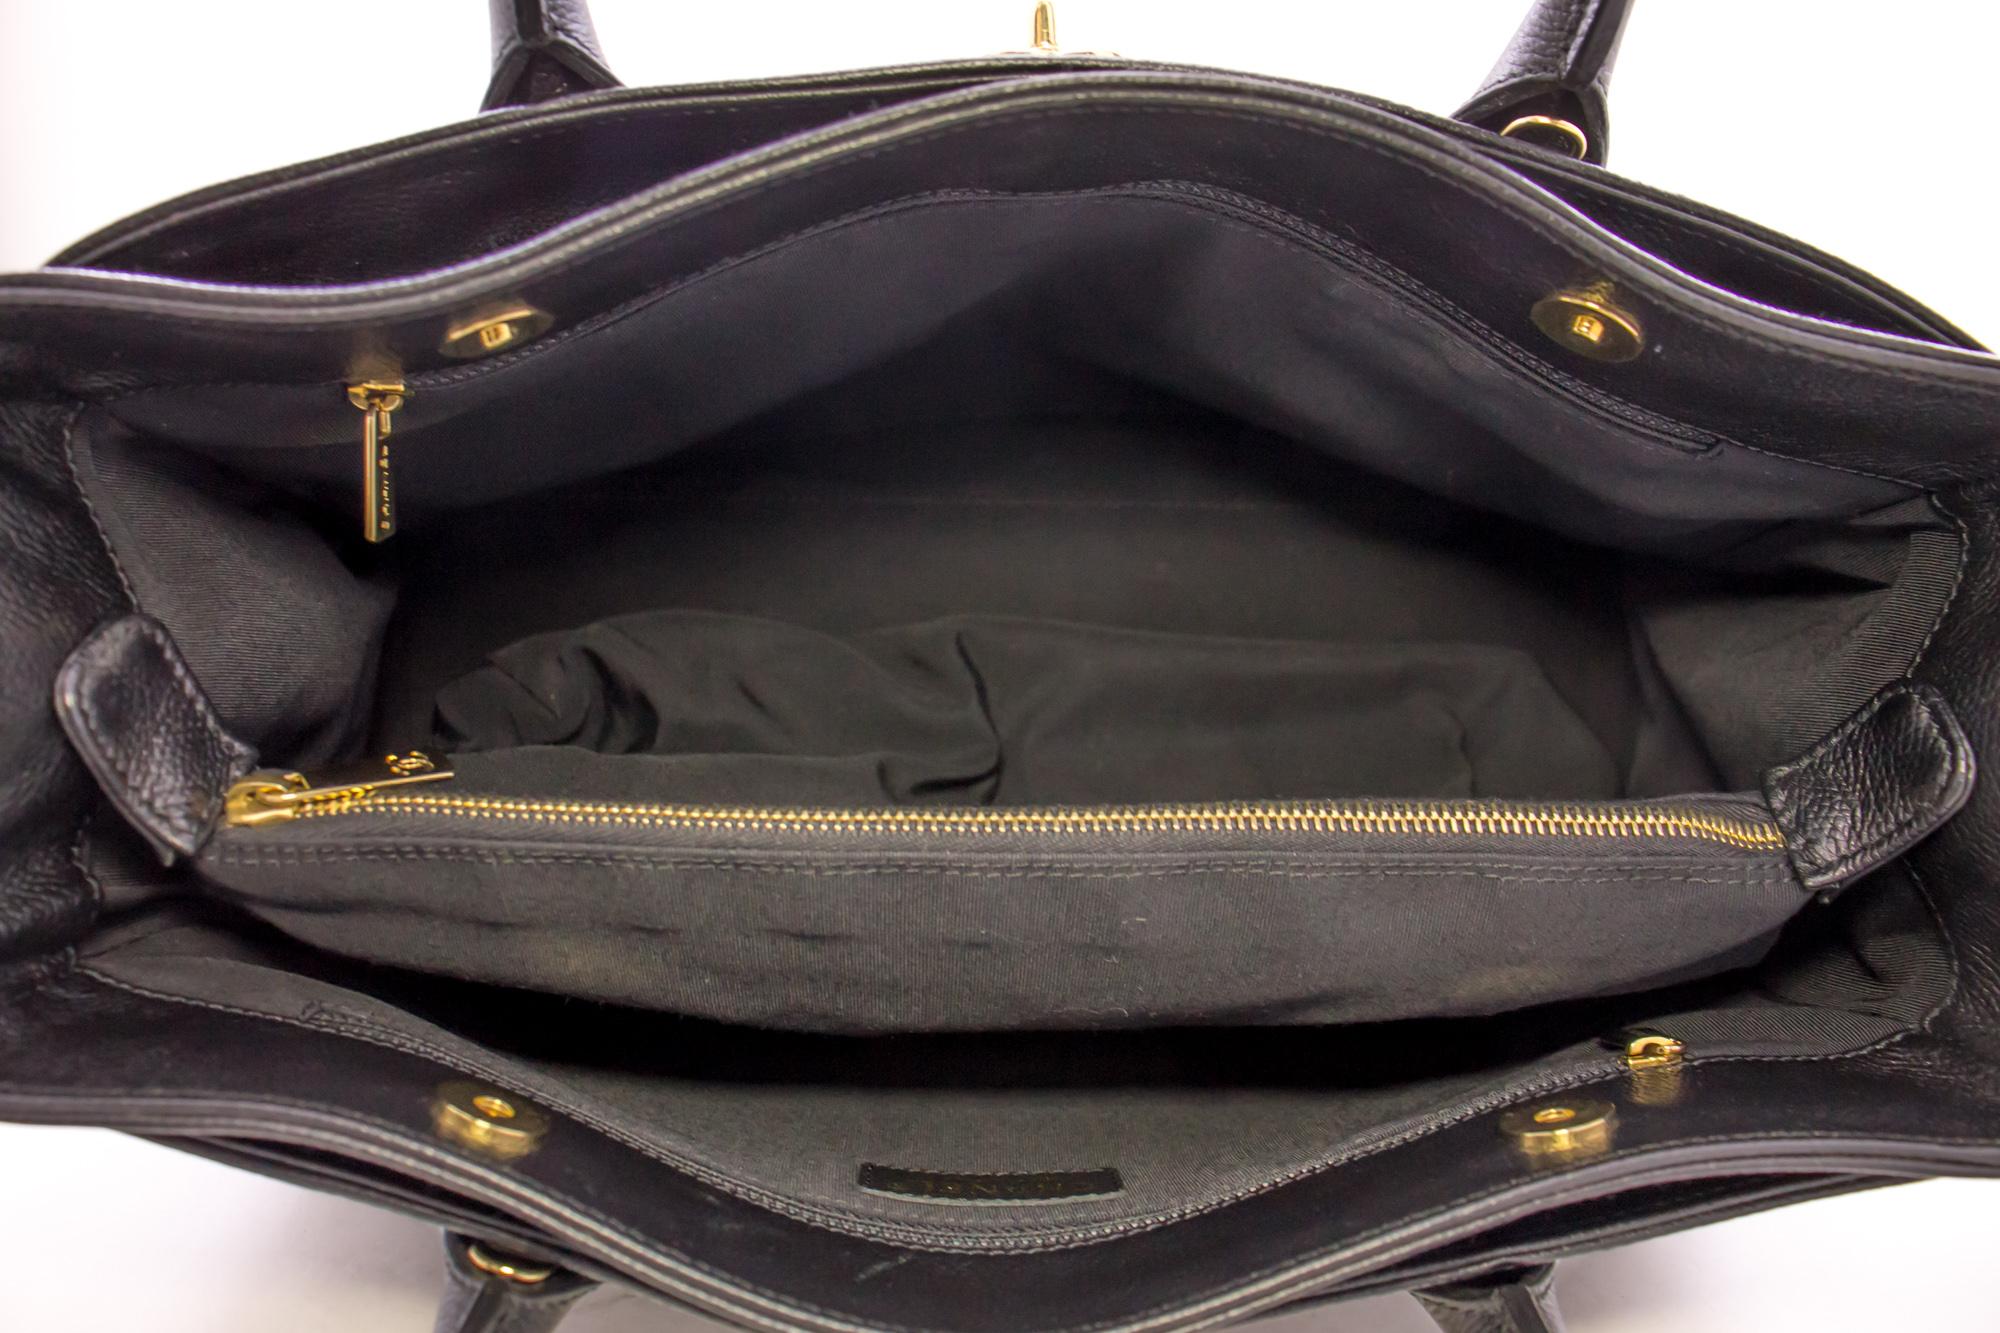 CHANEL Executive Tote Caviar Shoulder Bag Handbag Black Gold Strap 6